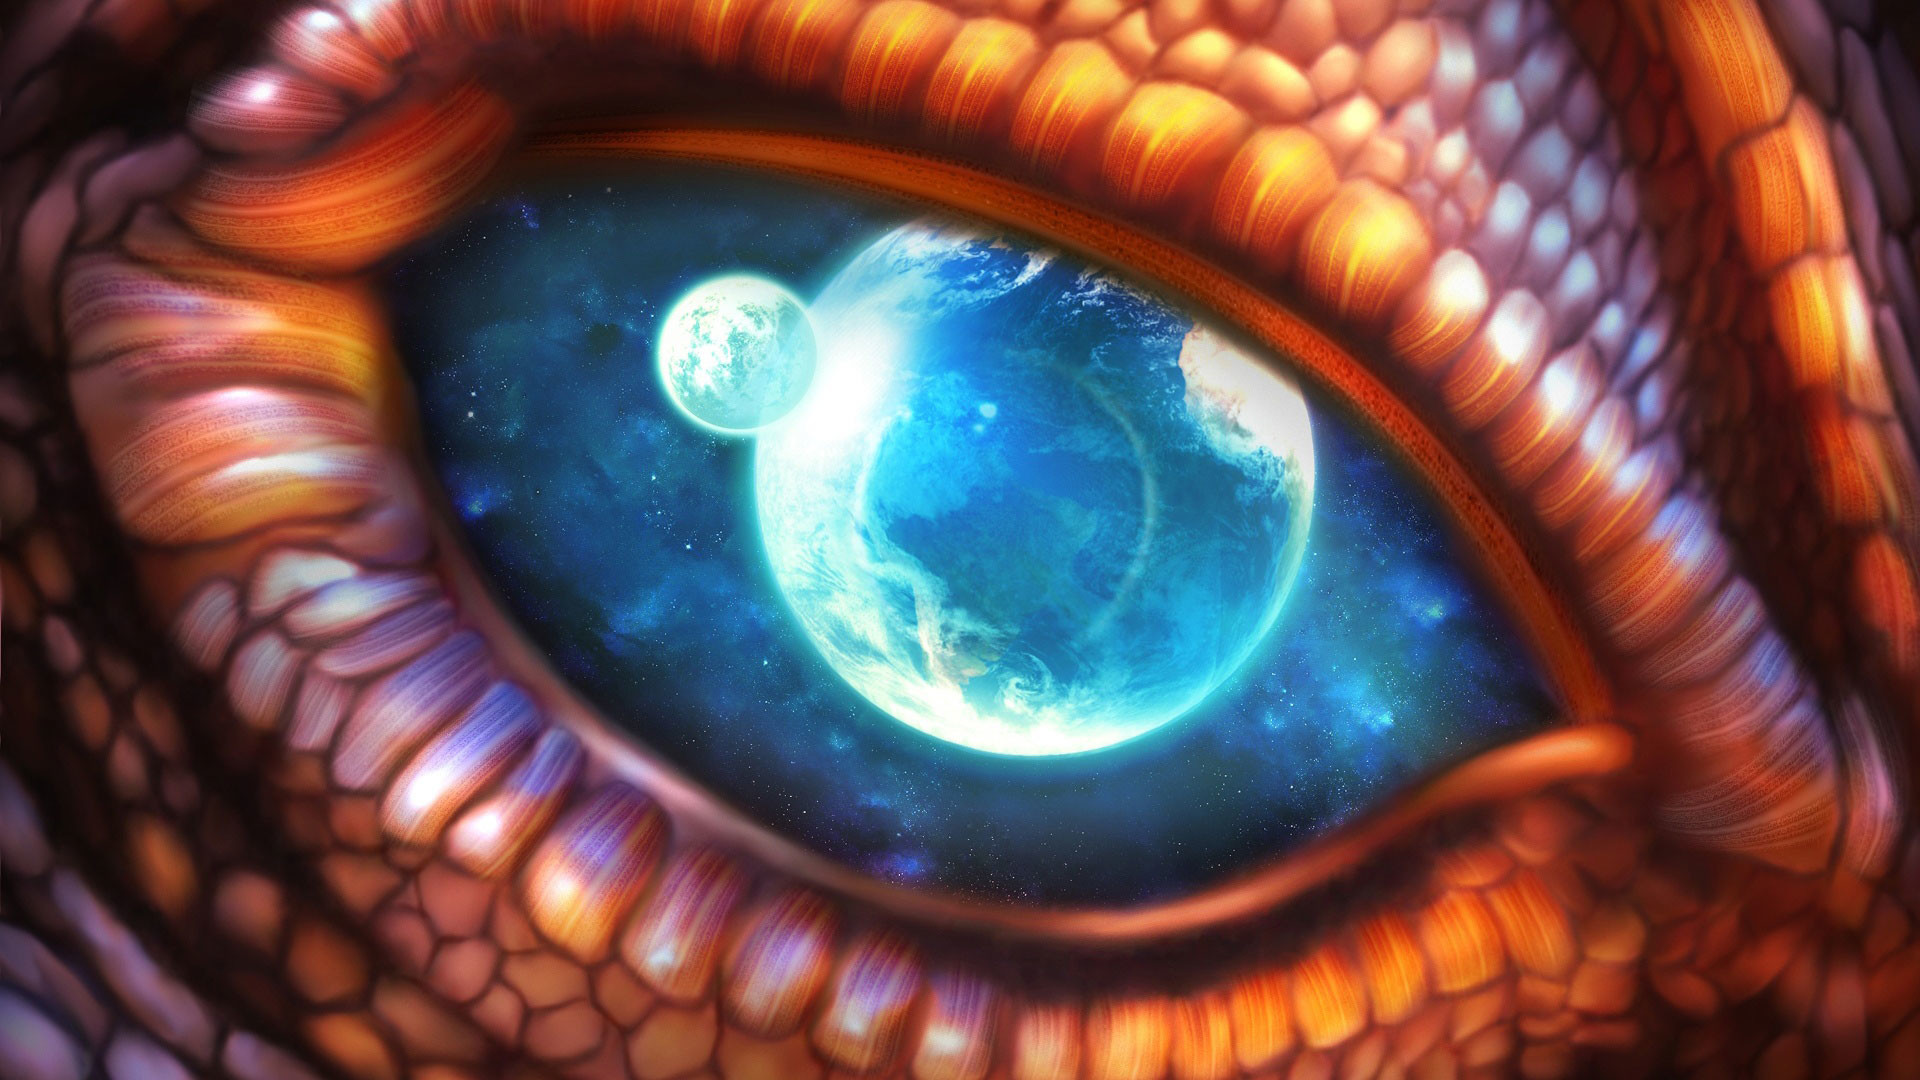 Hd pics photos beautiful dragon eye close up animals planets hd quality desktop background wallpaper